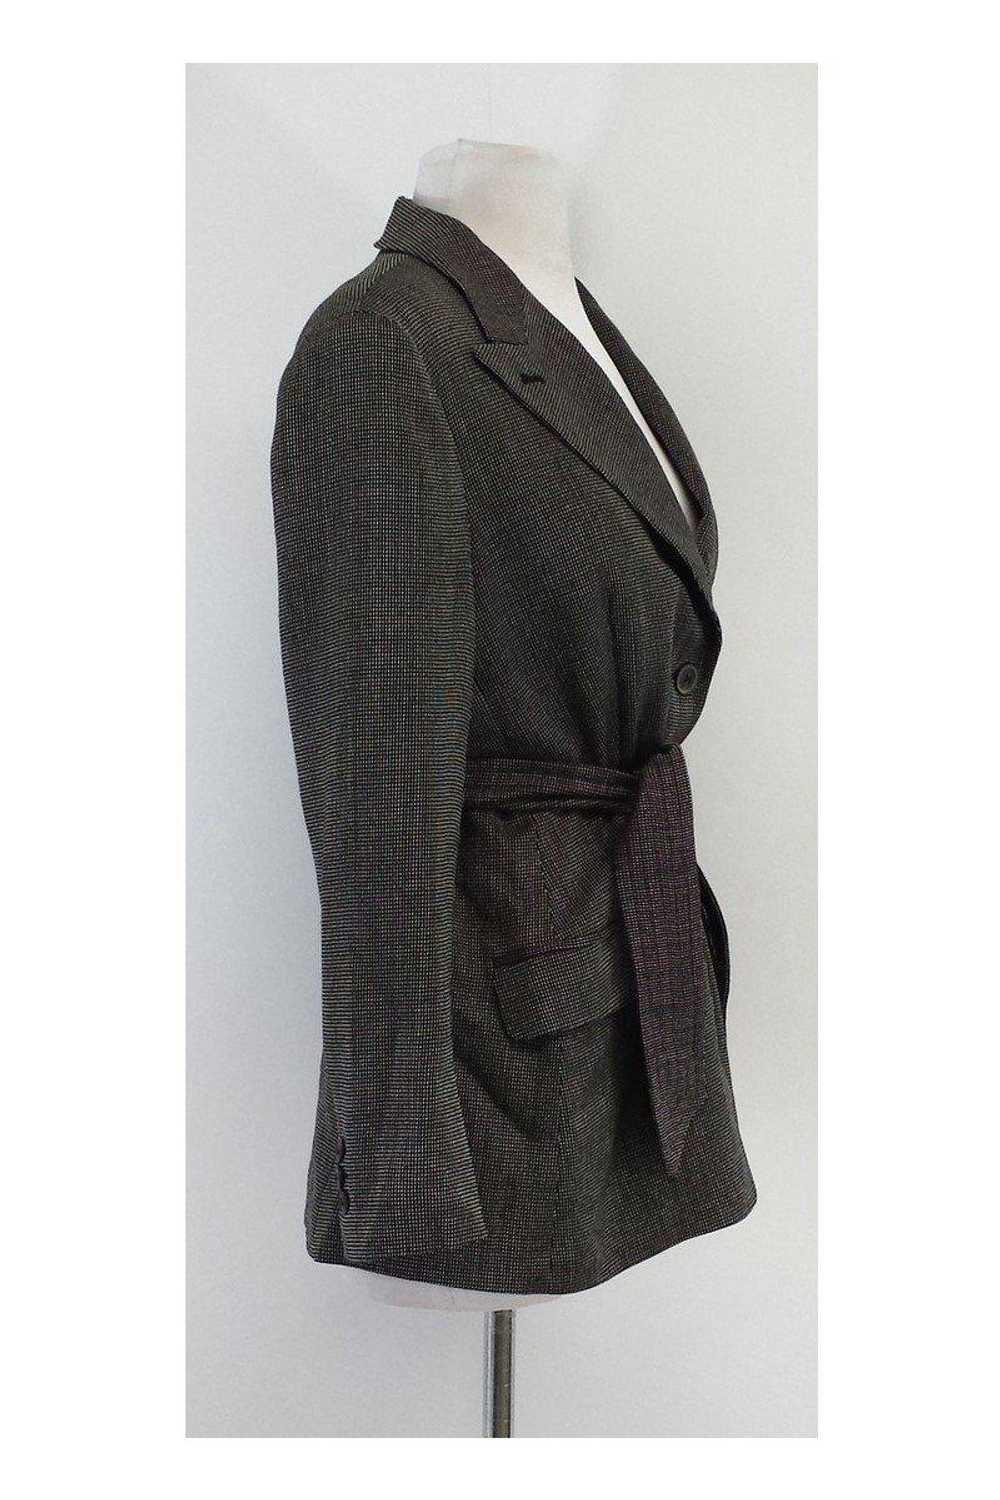 Max Mara - Black & White Wool Tweed Jacket Sz 8 - image 2